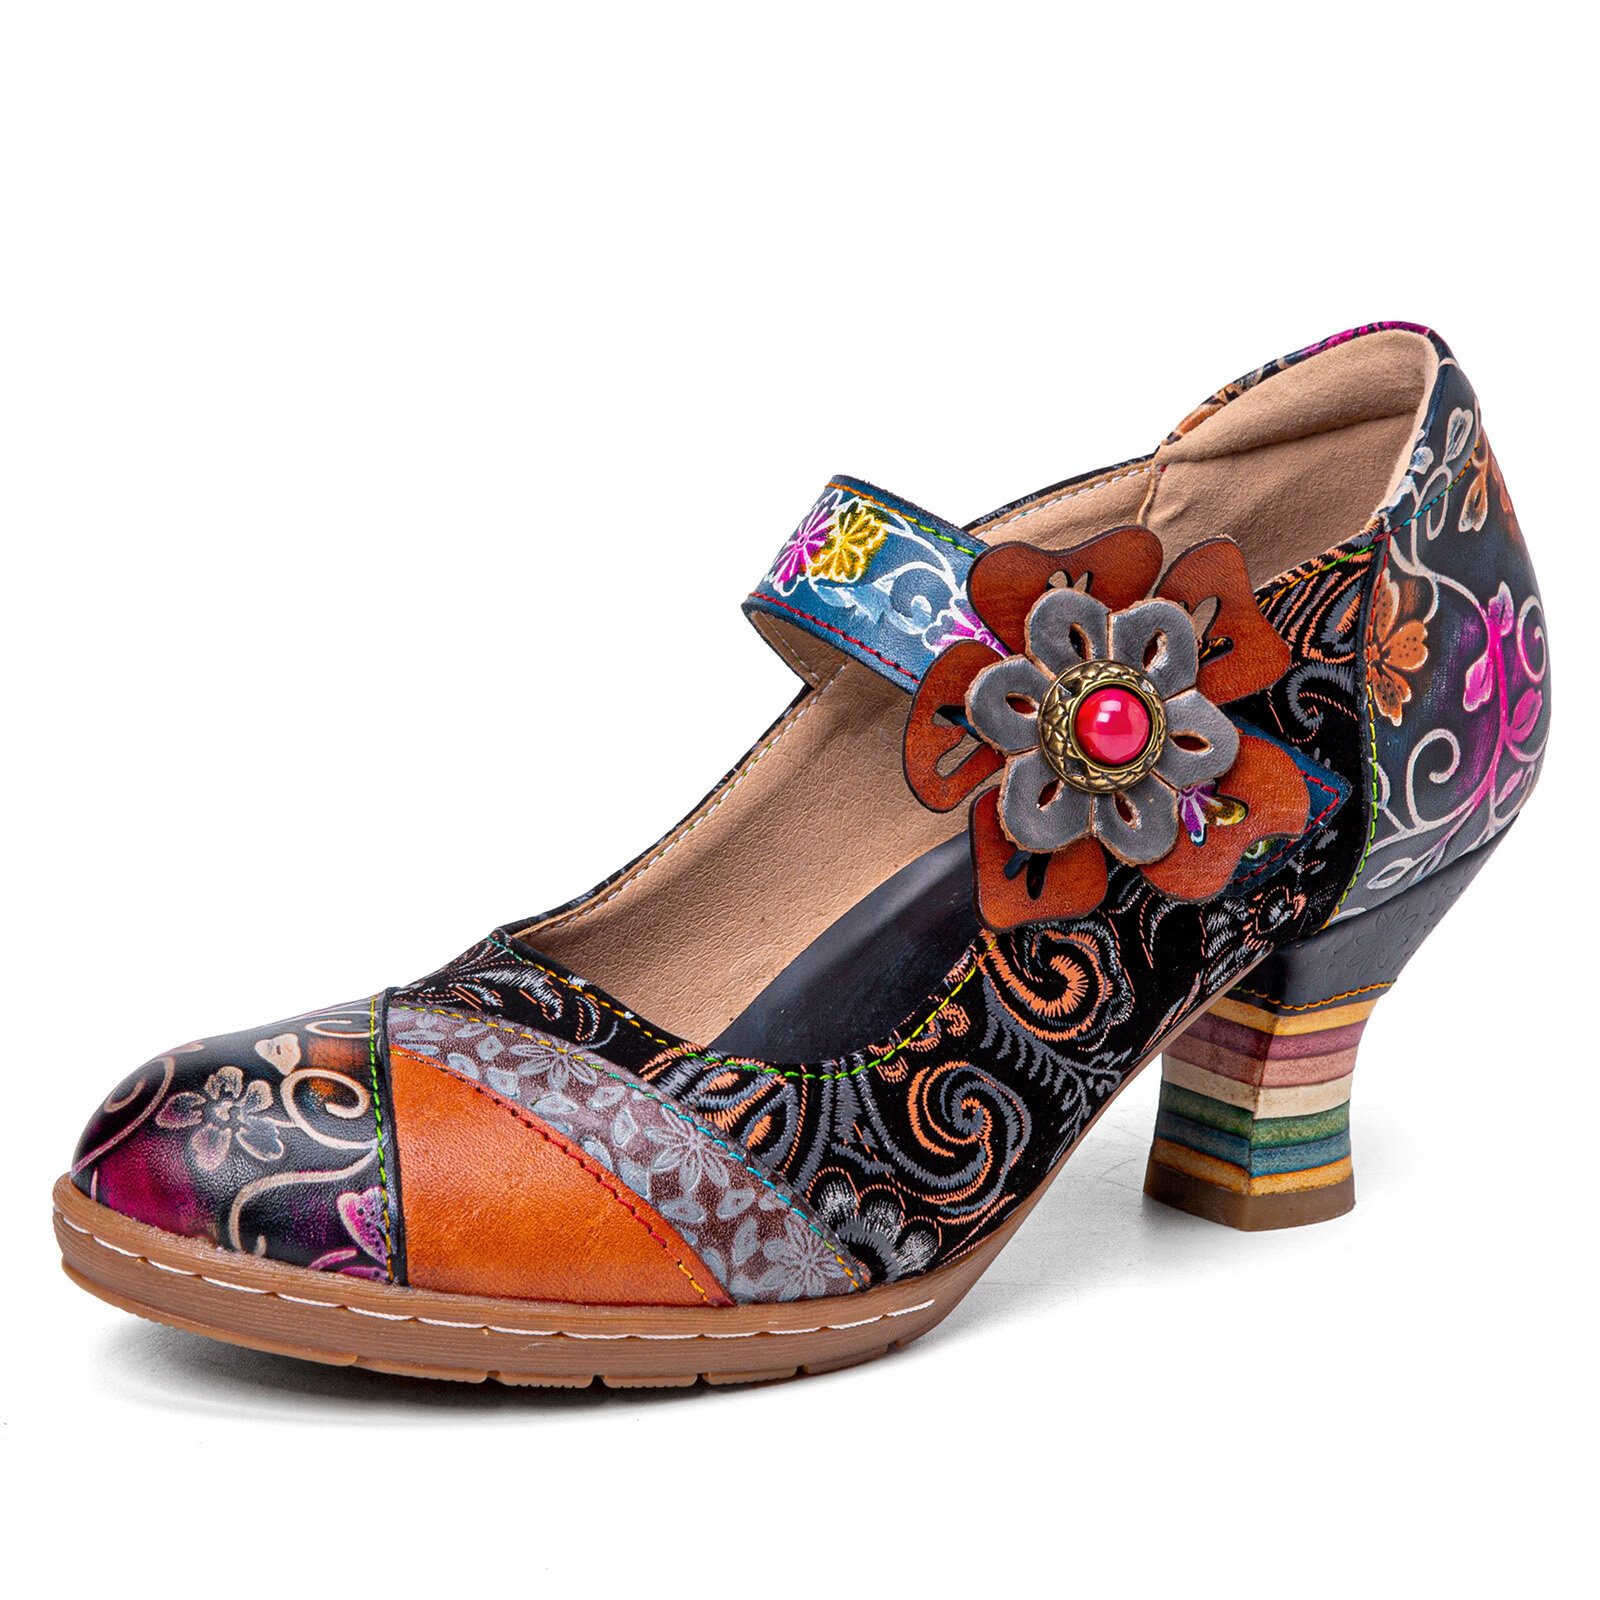 

Socofy Leather Винтаж Colorful Туфли Мэри Джейн с цветочным декором